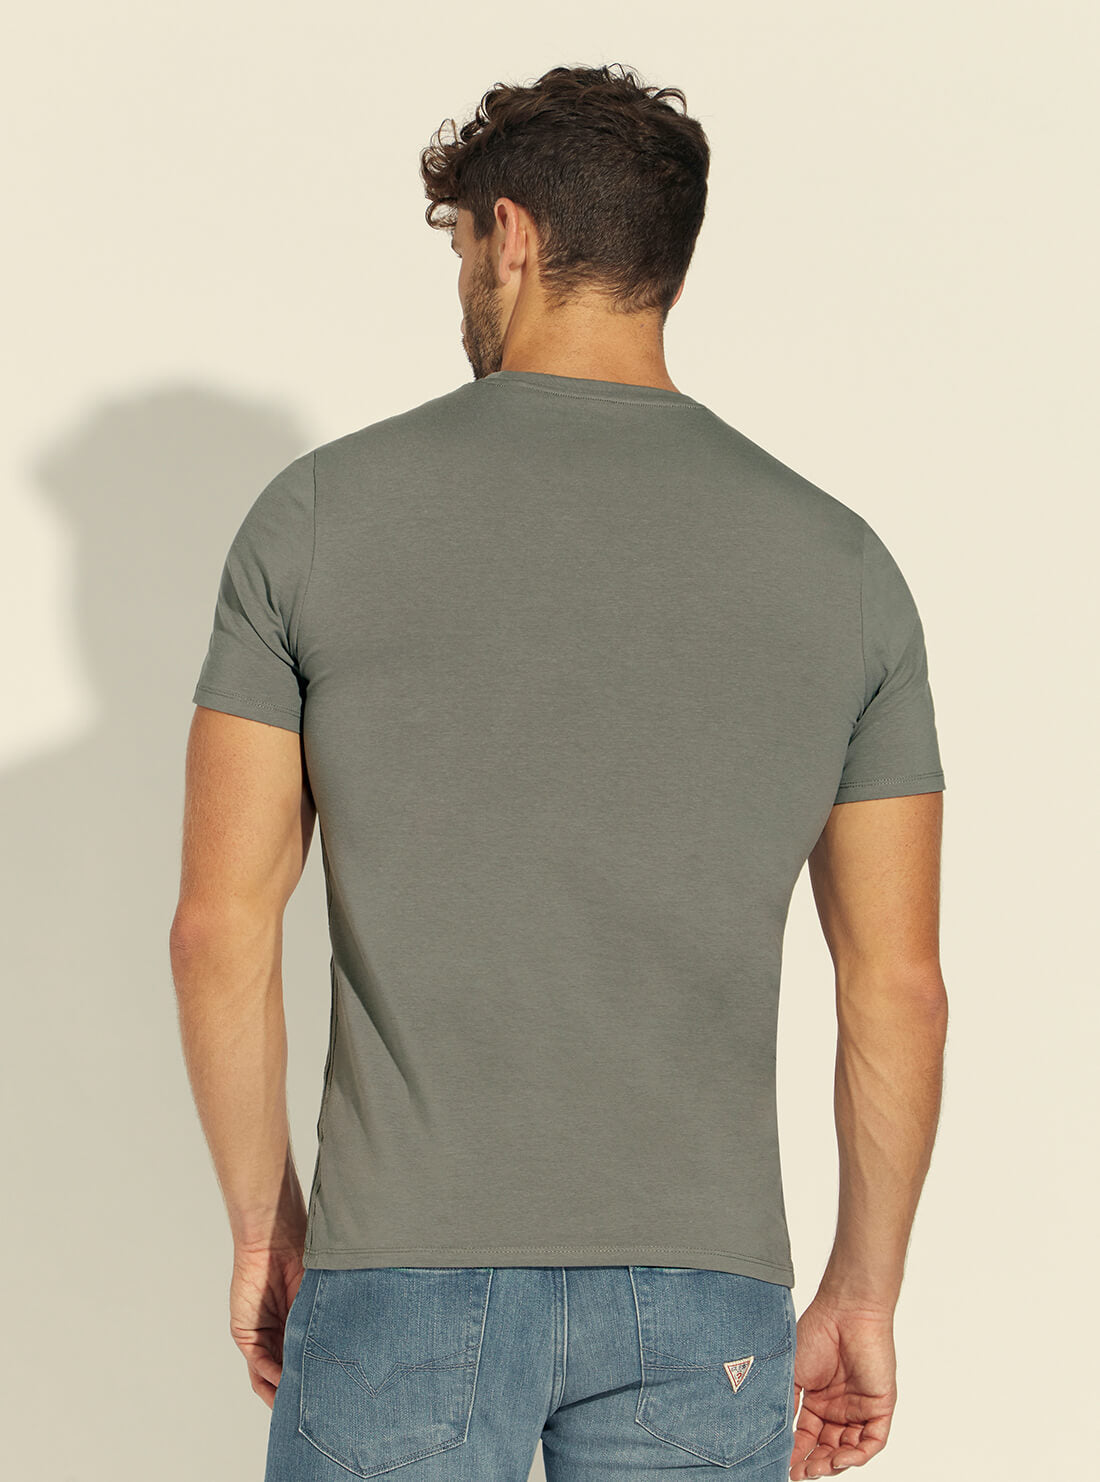 GUESS Mens Steel Grey Dripping Logo T-Shirt M1BI37J1311 Back View